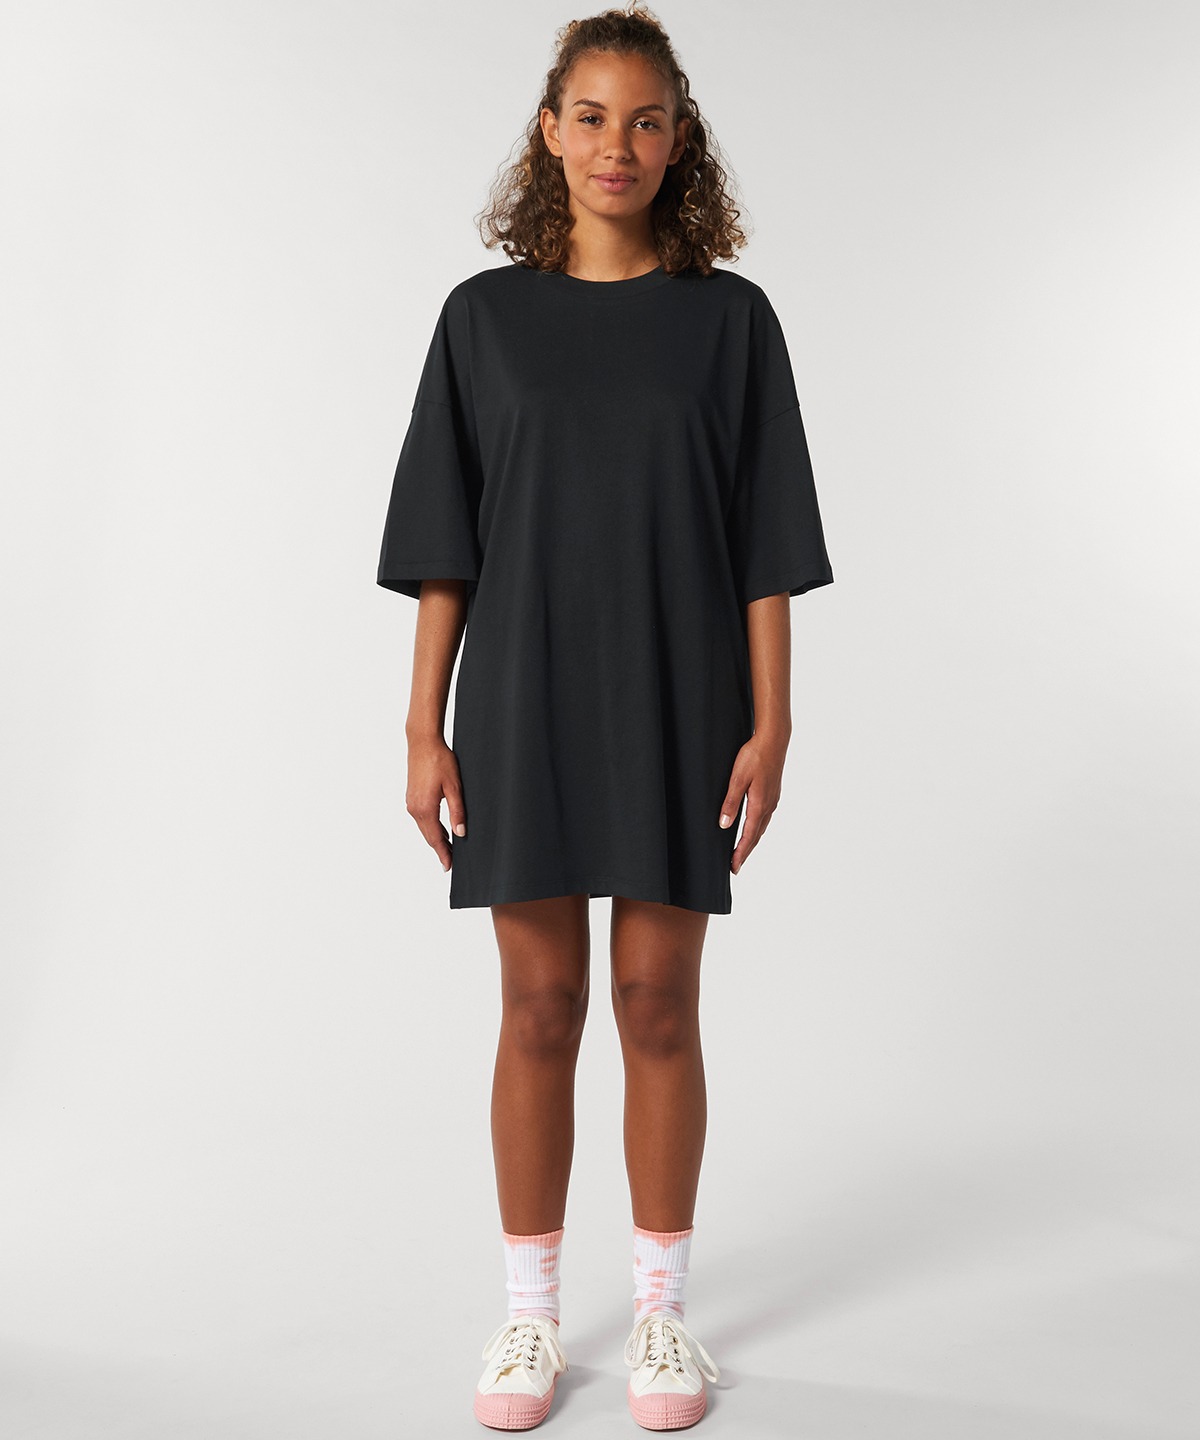 Stella Twister, the women's oversized t-shirt dress